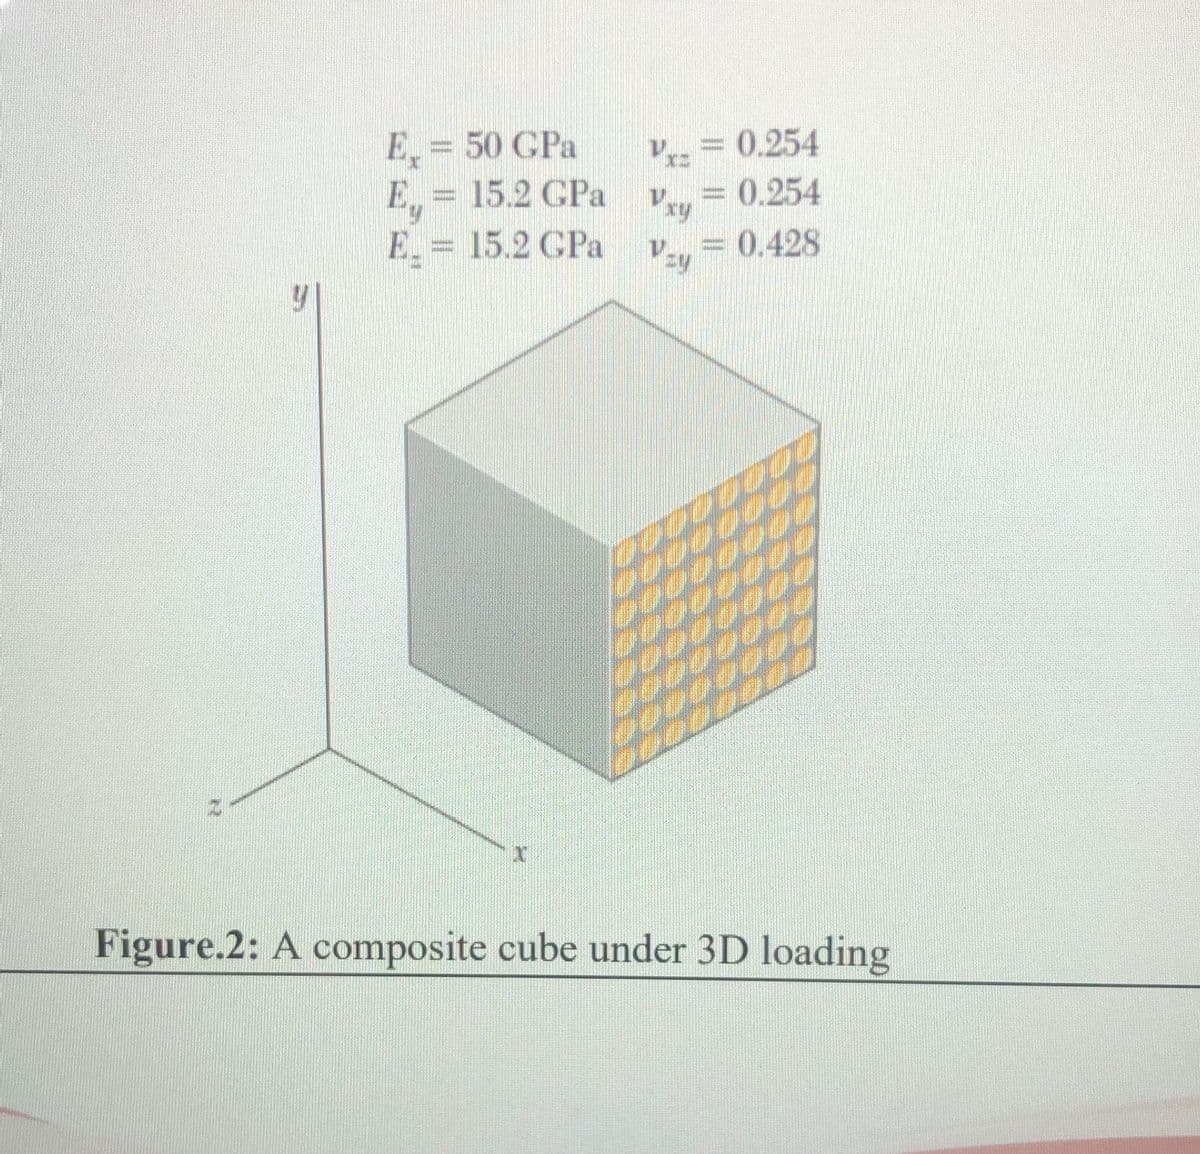 E = 50 GPa
E
= 15.2 GPa
E = 15.2 GPa
By
z = 0.254
Vxy <= 0.254
Vey
= 0.428
100
2008
X
Figure.2: A composite cube under 3D loading